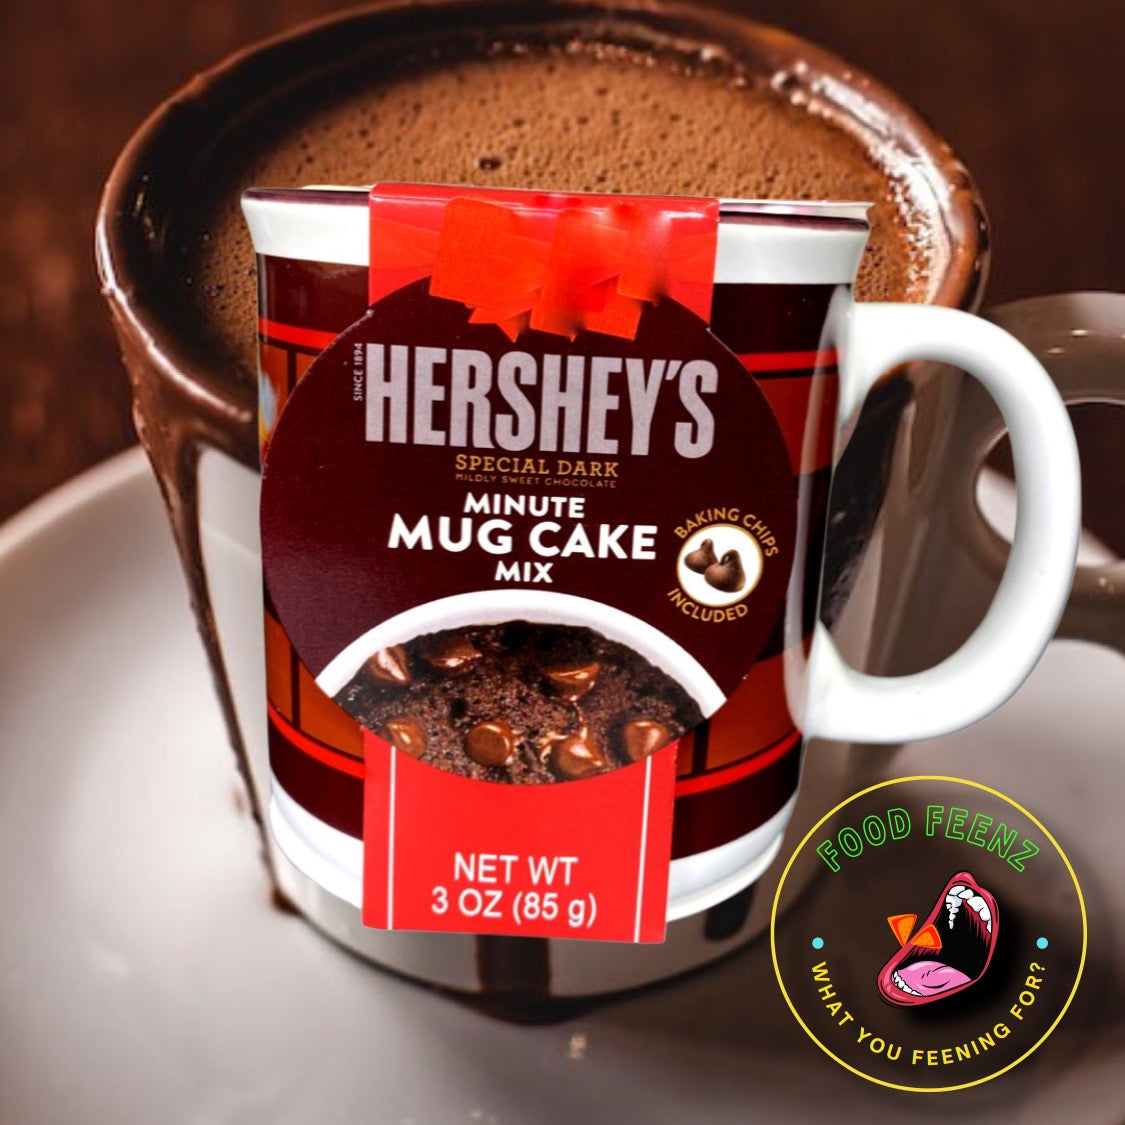 Hershey's Minute Mug Cake Mix